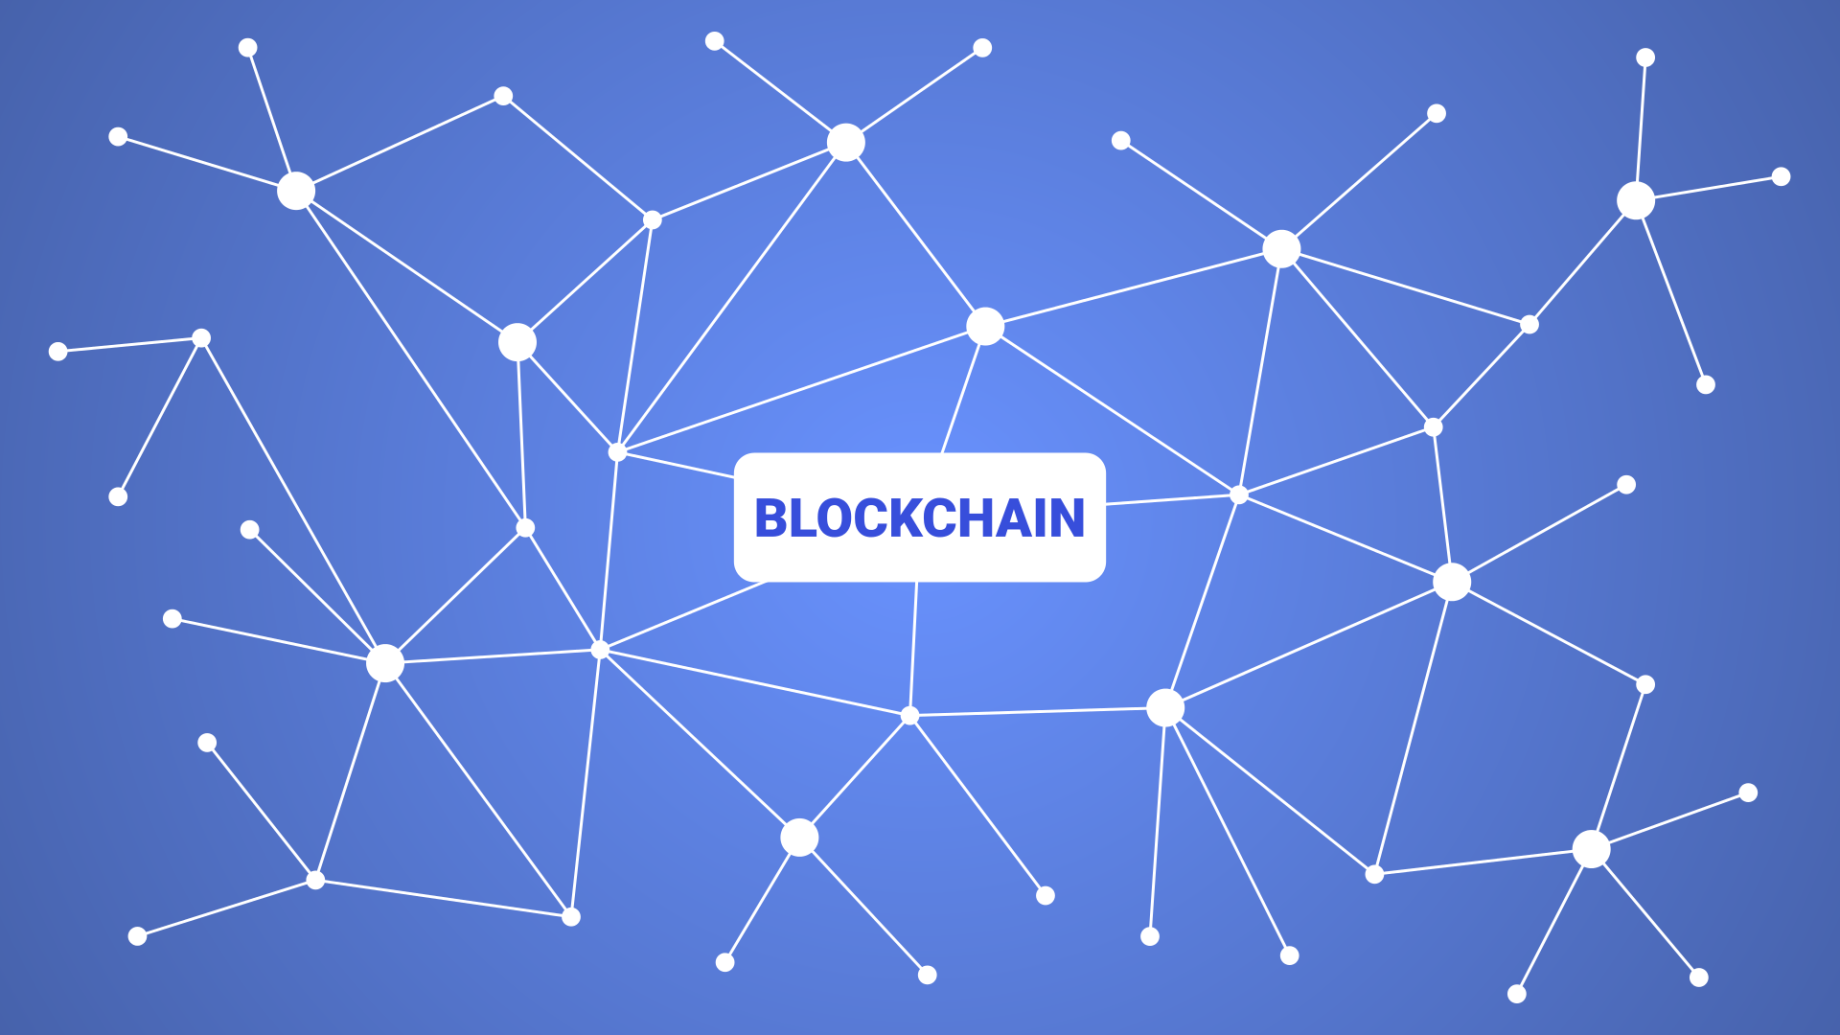 Word "blockchain" written on the blue background.